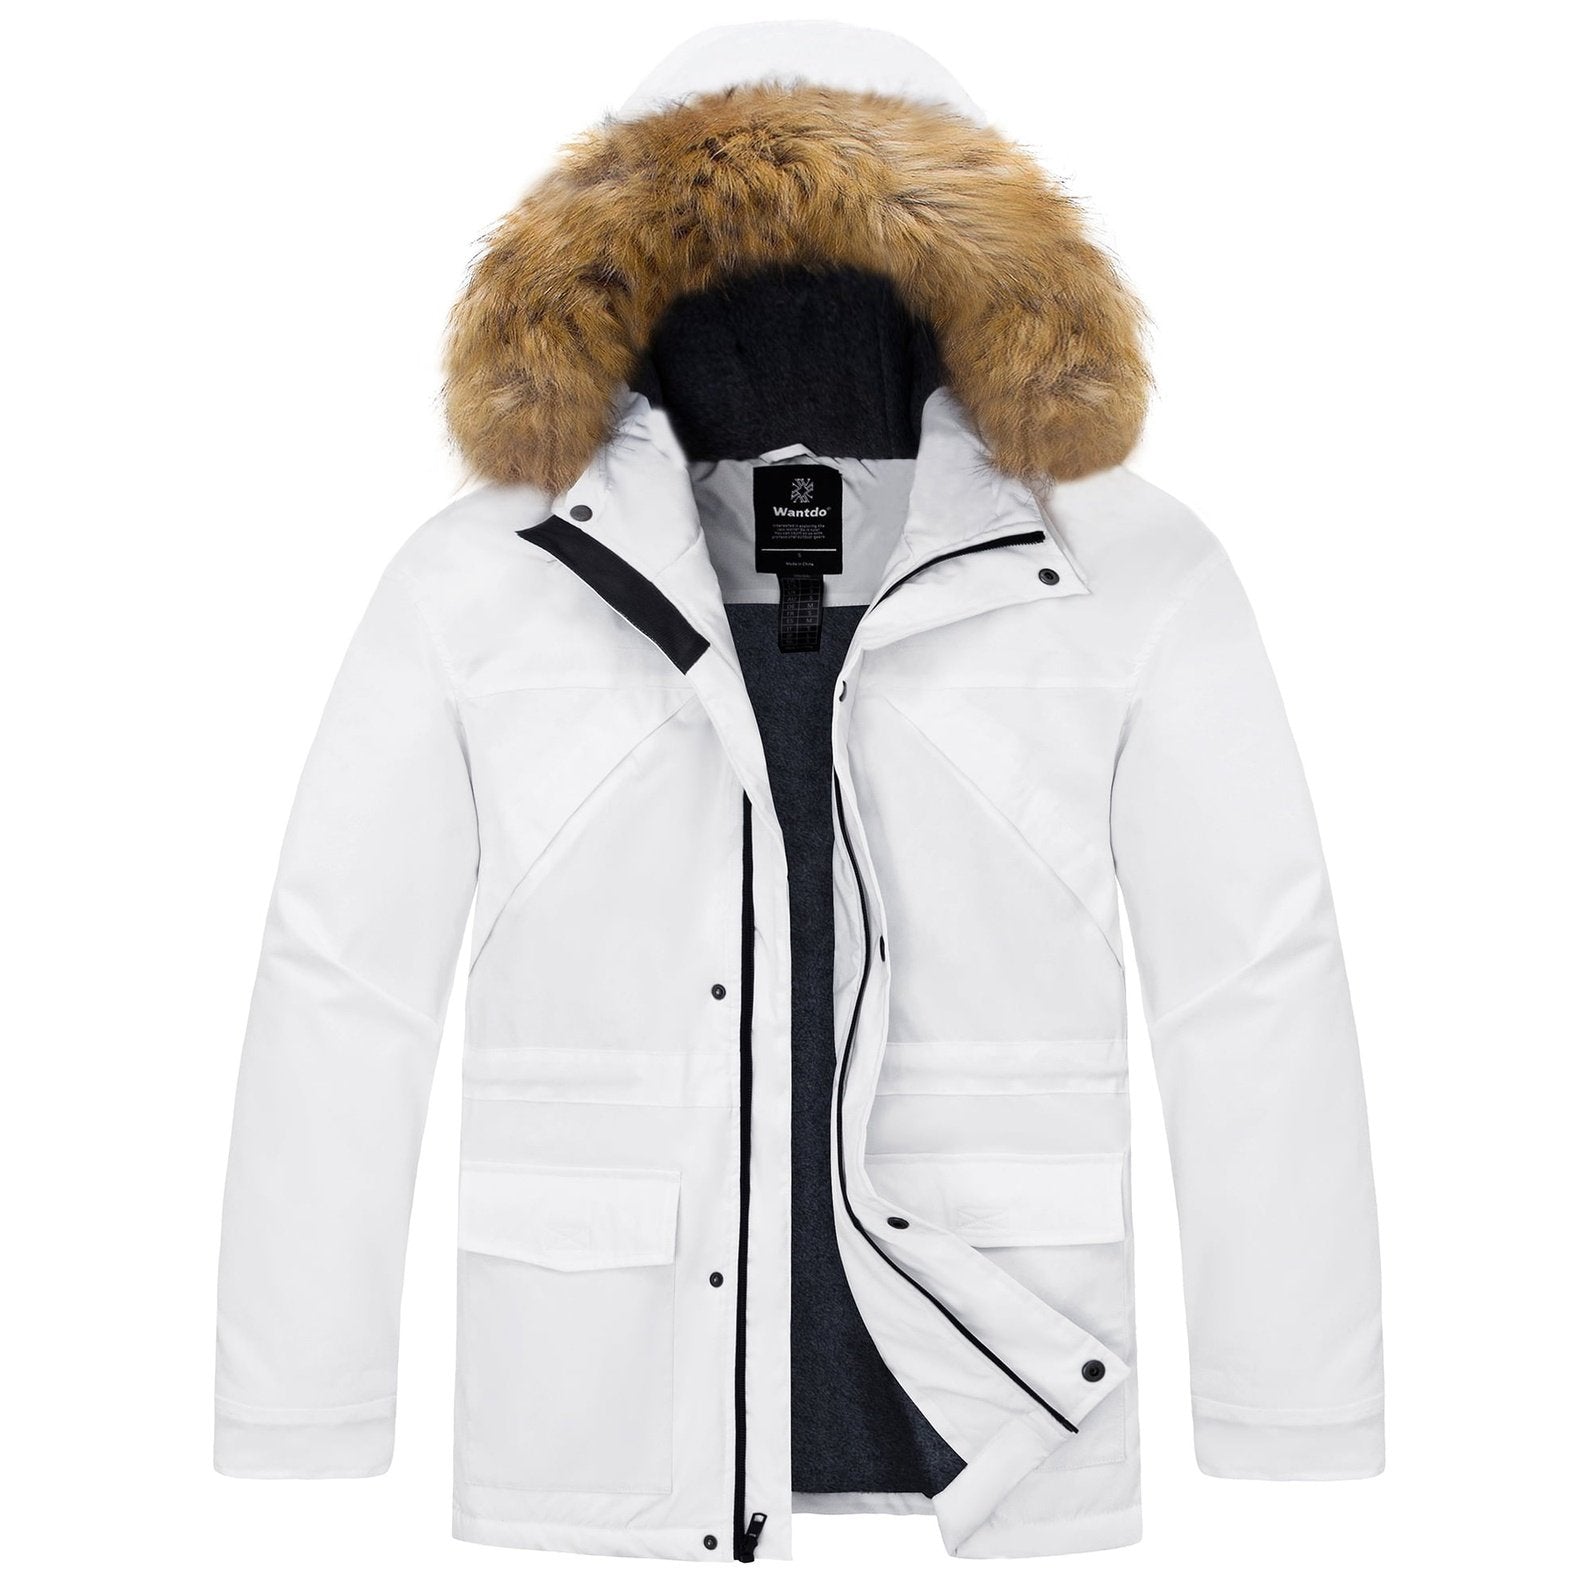 Wantdo Men's Warm Winter Coat Insulated Parka Padded Puffer Jacket